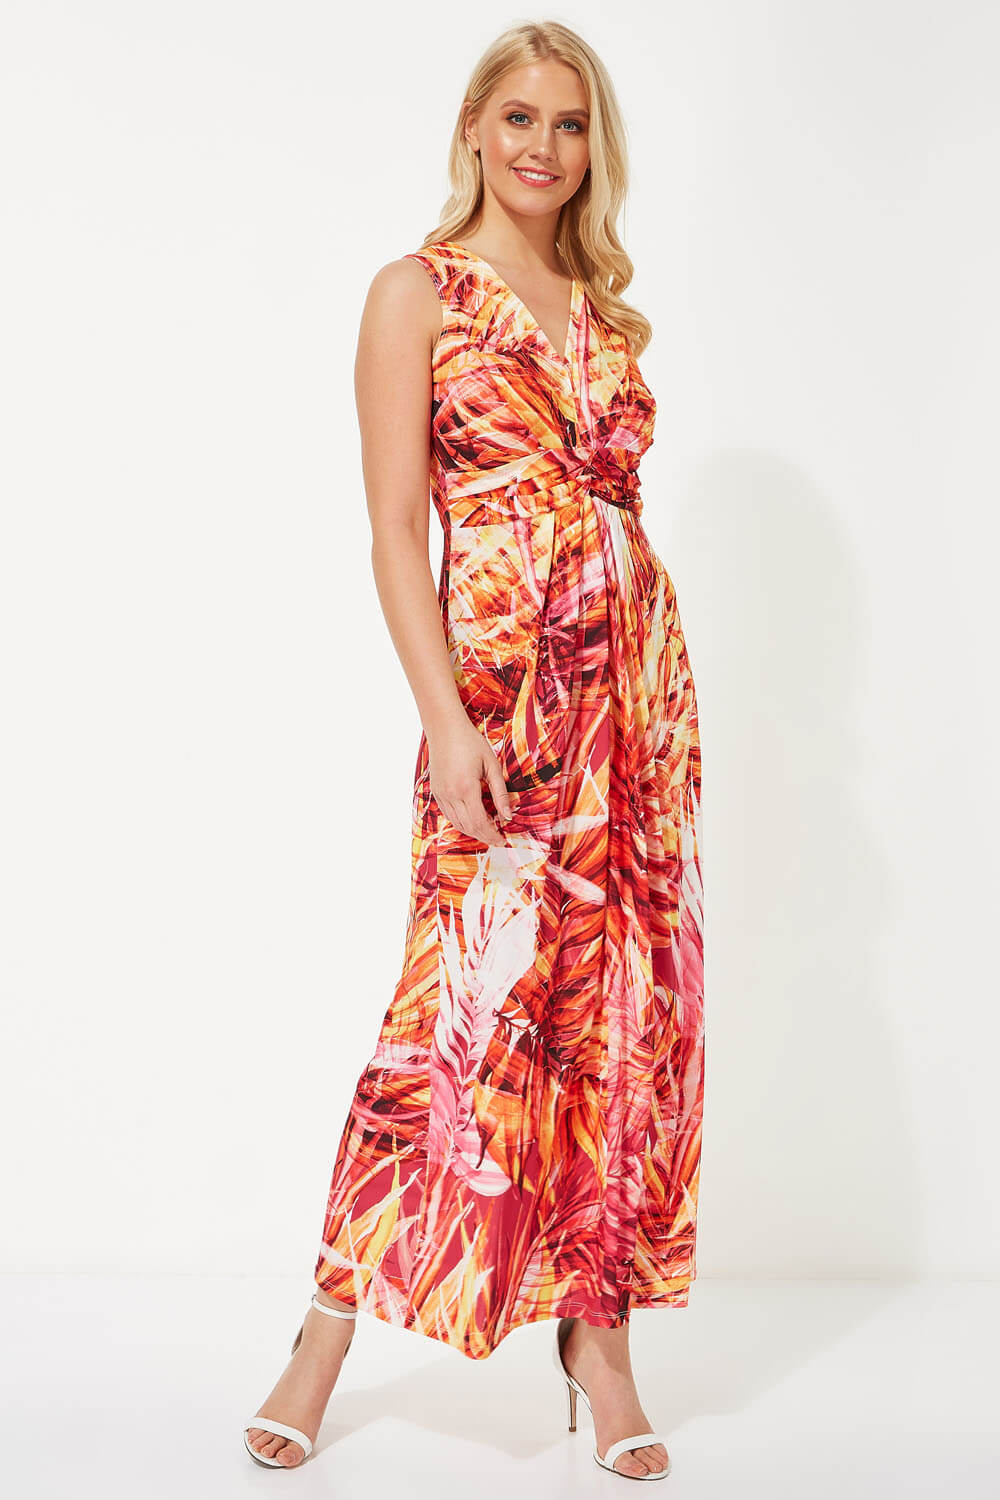 ORANGE Tropical Print Twist Front Maxi Dress, Image 2 of 5